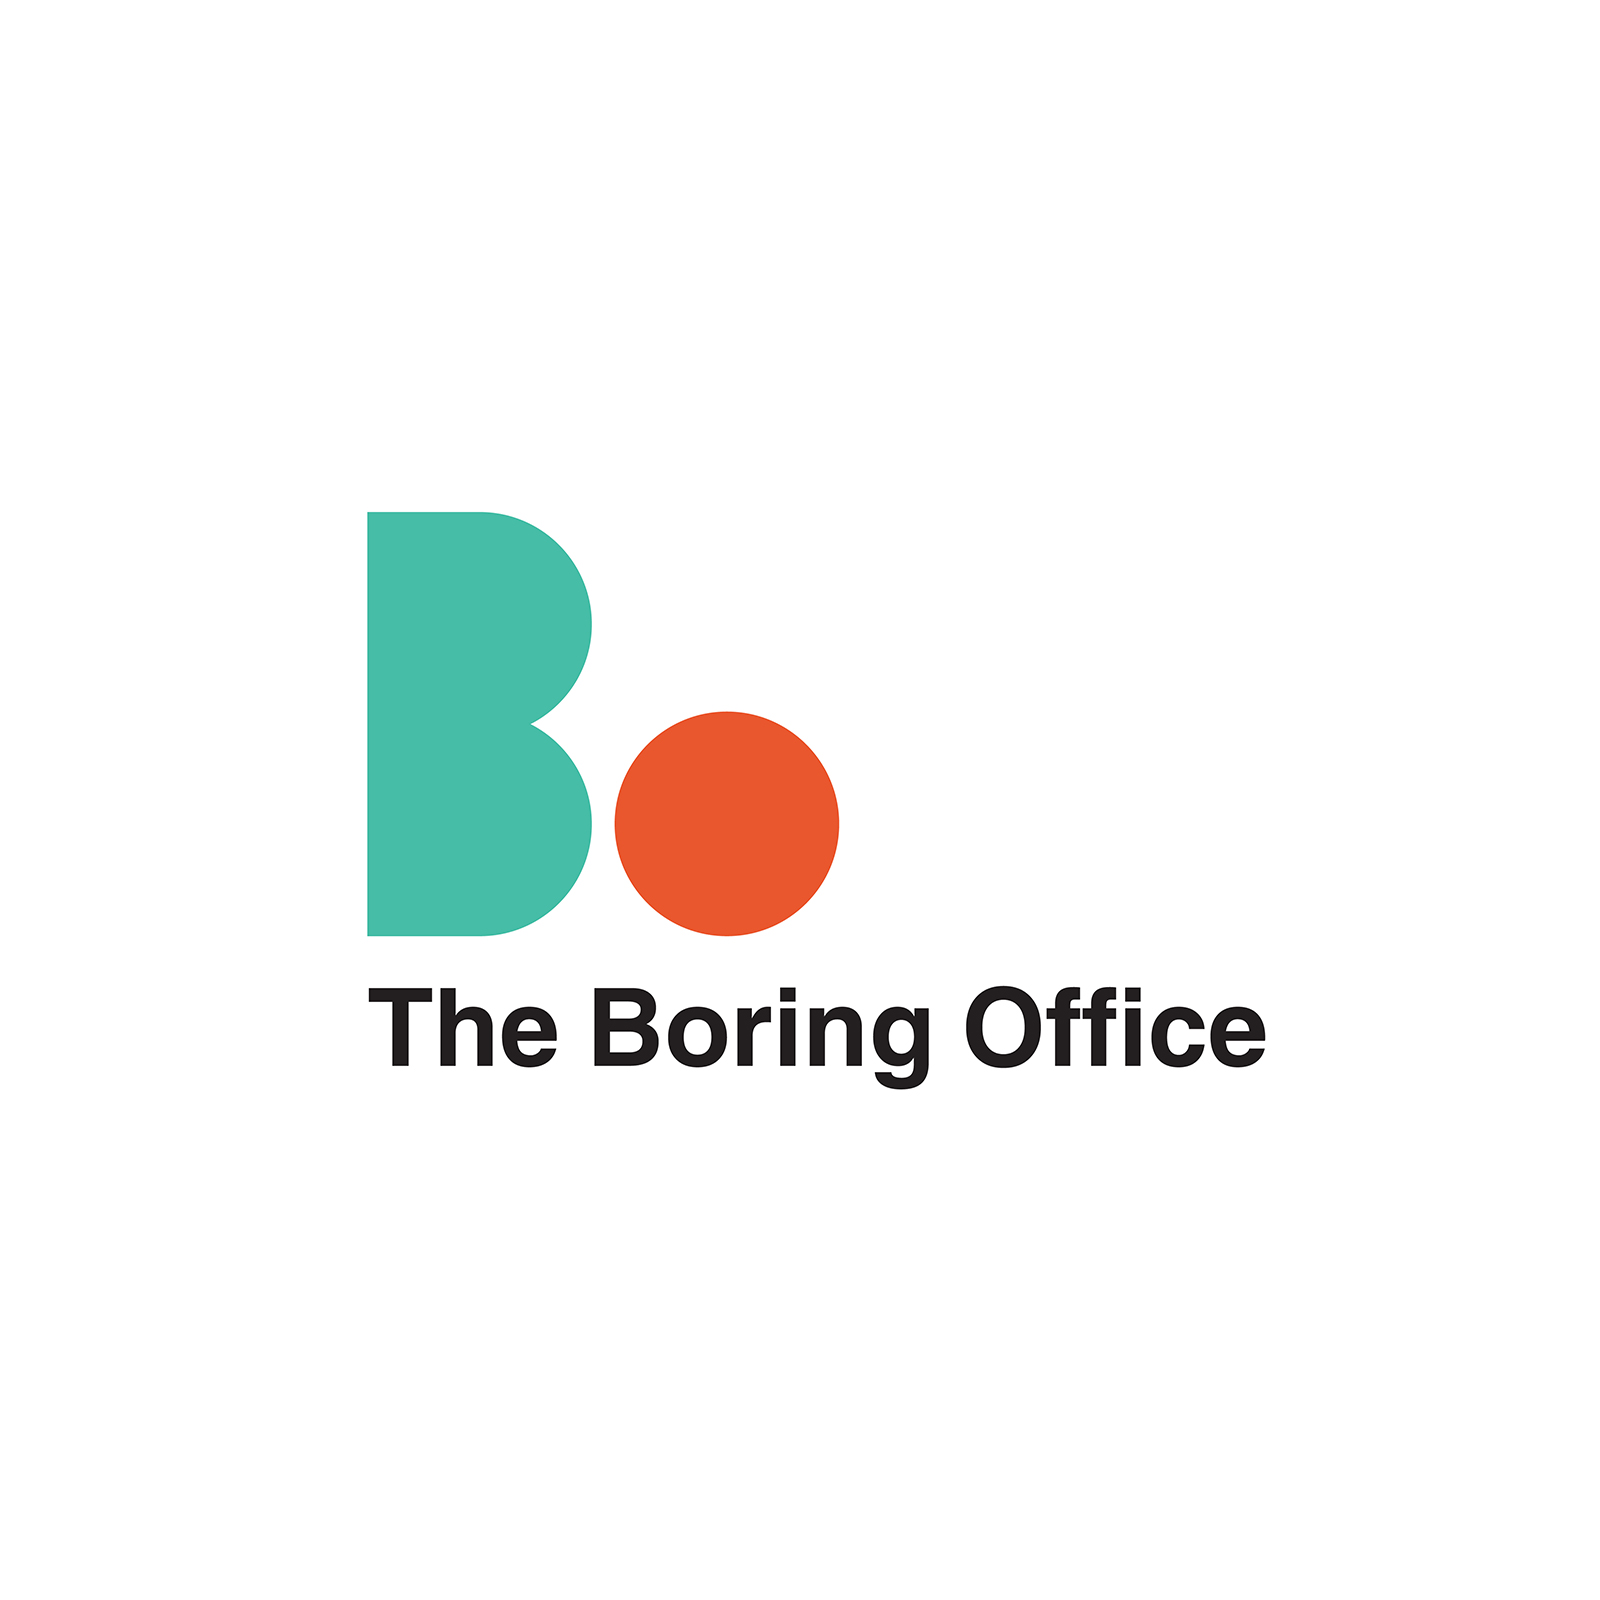 The Boring Office Identity (1)